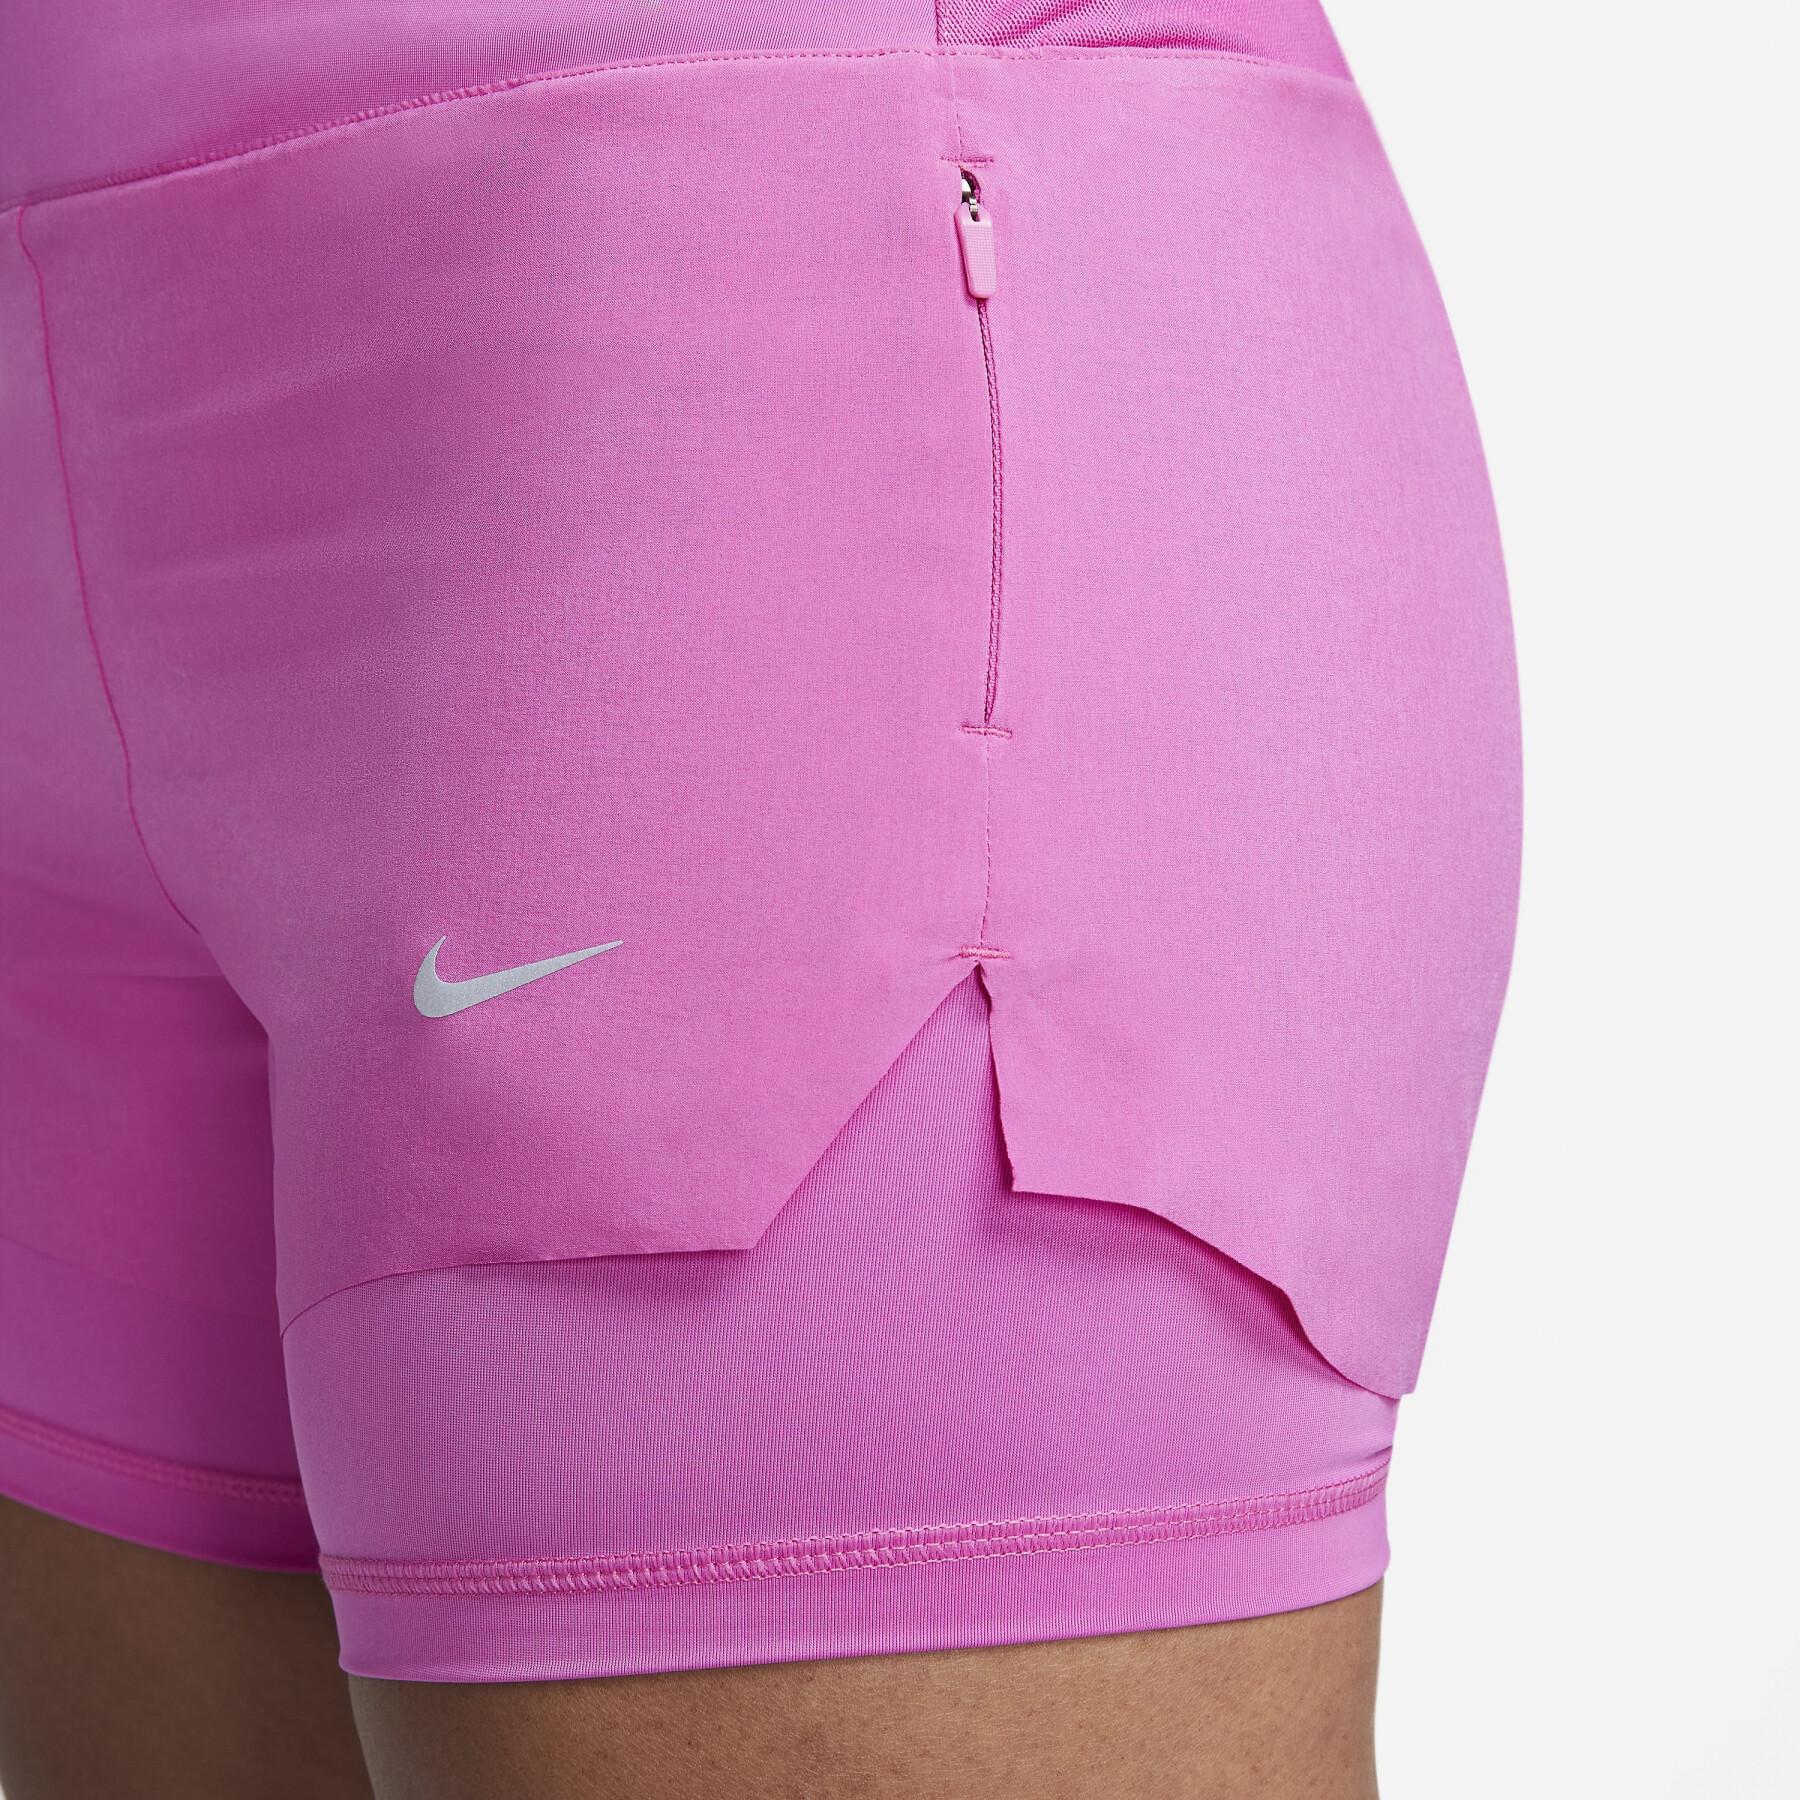 Pantalones cortos 2 en 1 para mujer Nike Swift Dri-Fit 3 "